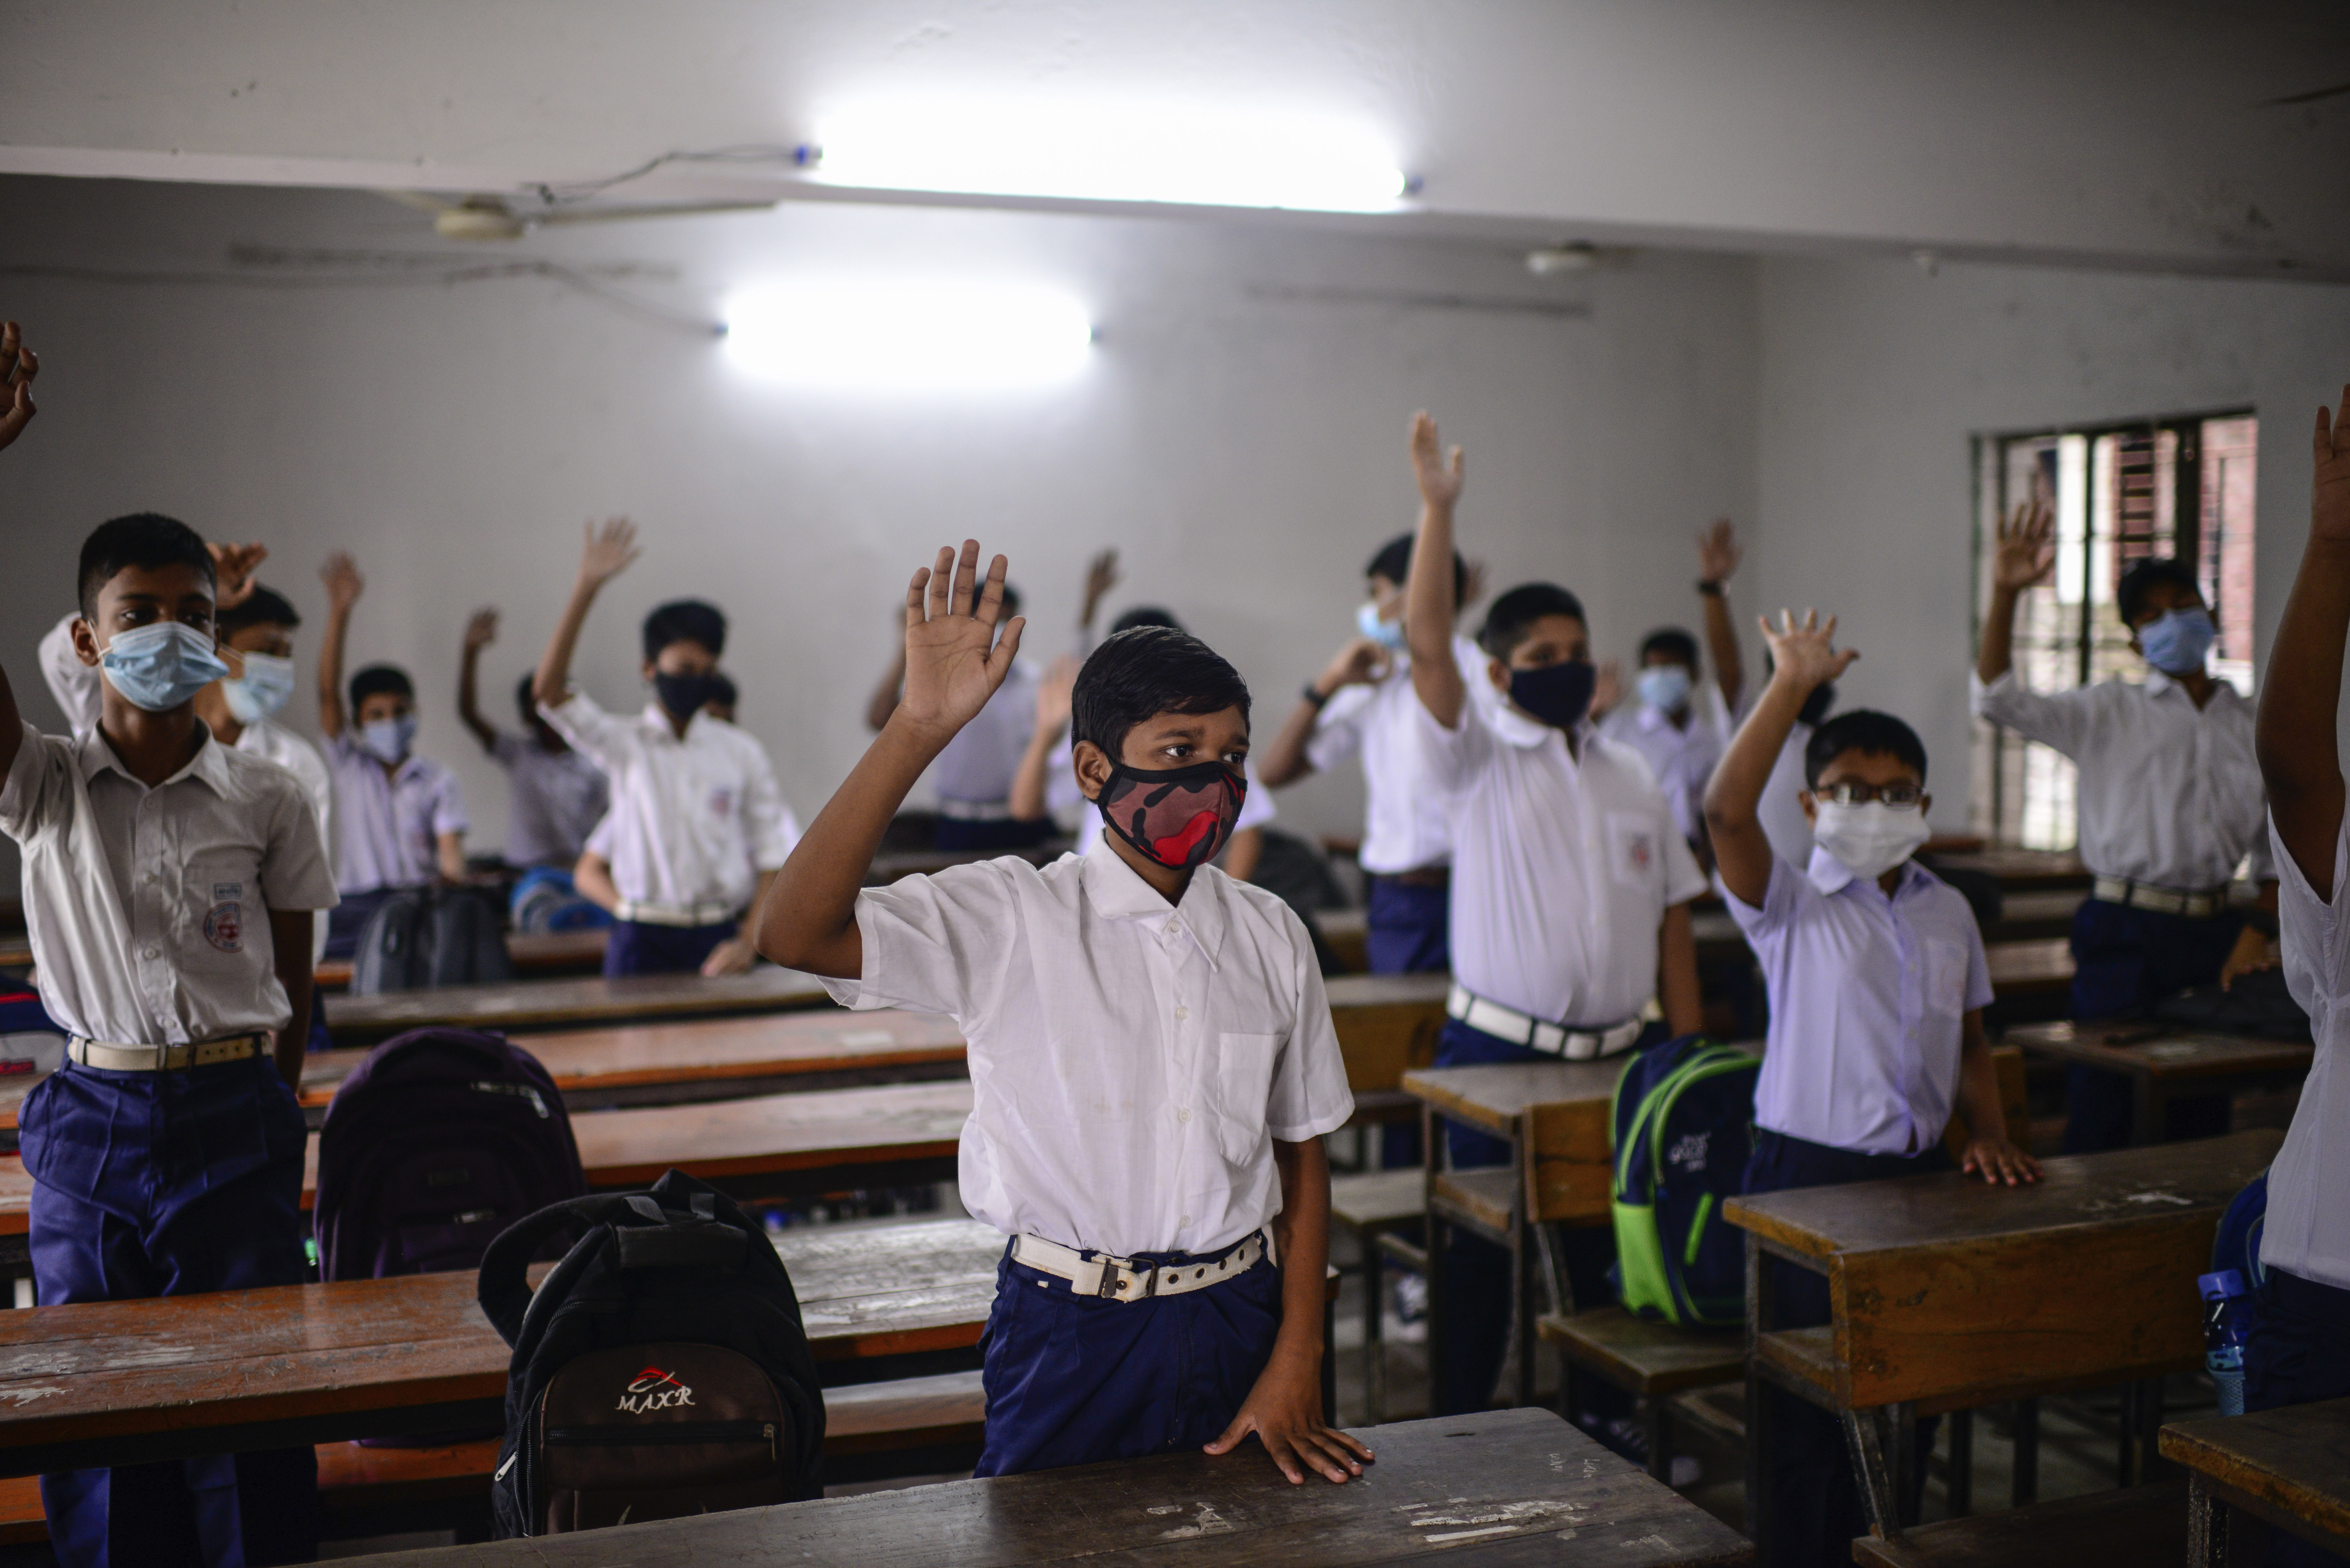 Dhaka Girl School Xxx - Bangladesh schools open, most staff vaccinated - The Boston Globe